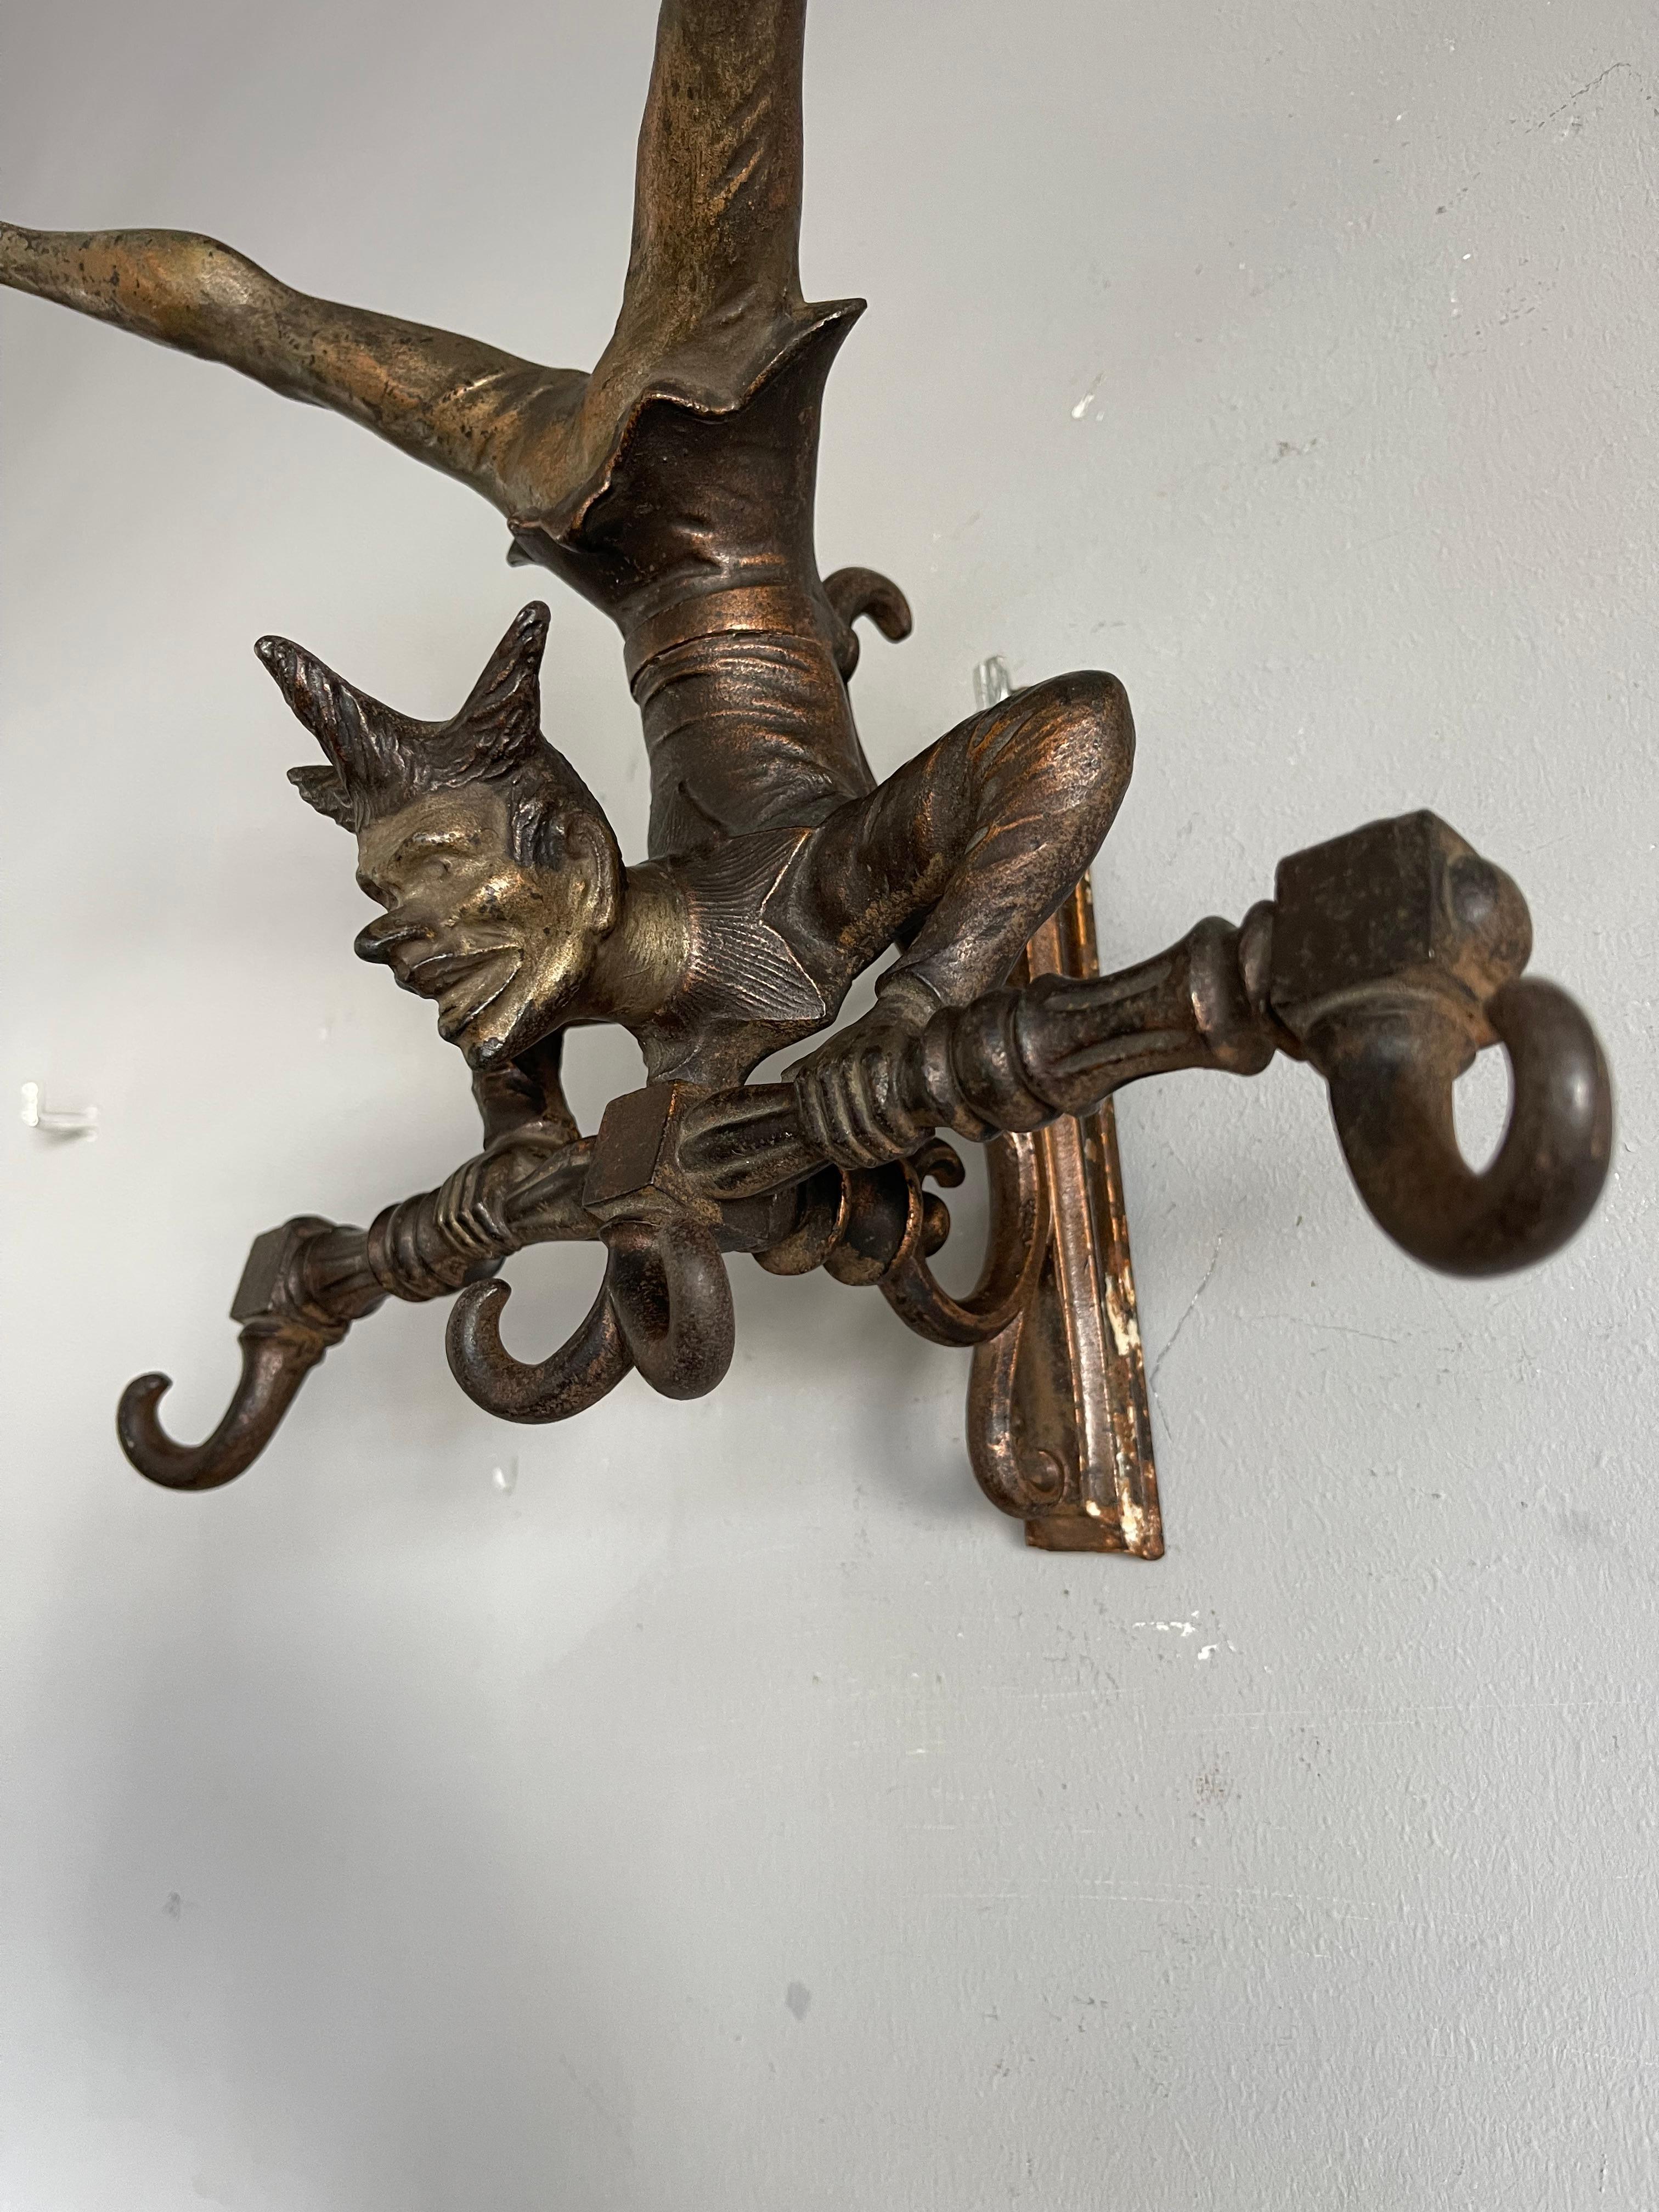 German Antique Bronzed Iron Wall Key or Coat Rack w. Acrobatic Jester Figure, Great Fun